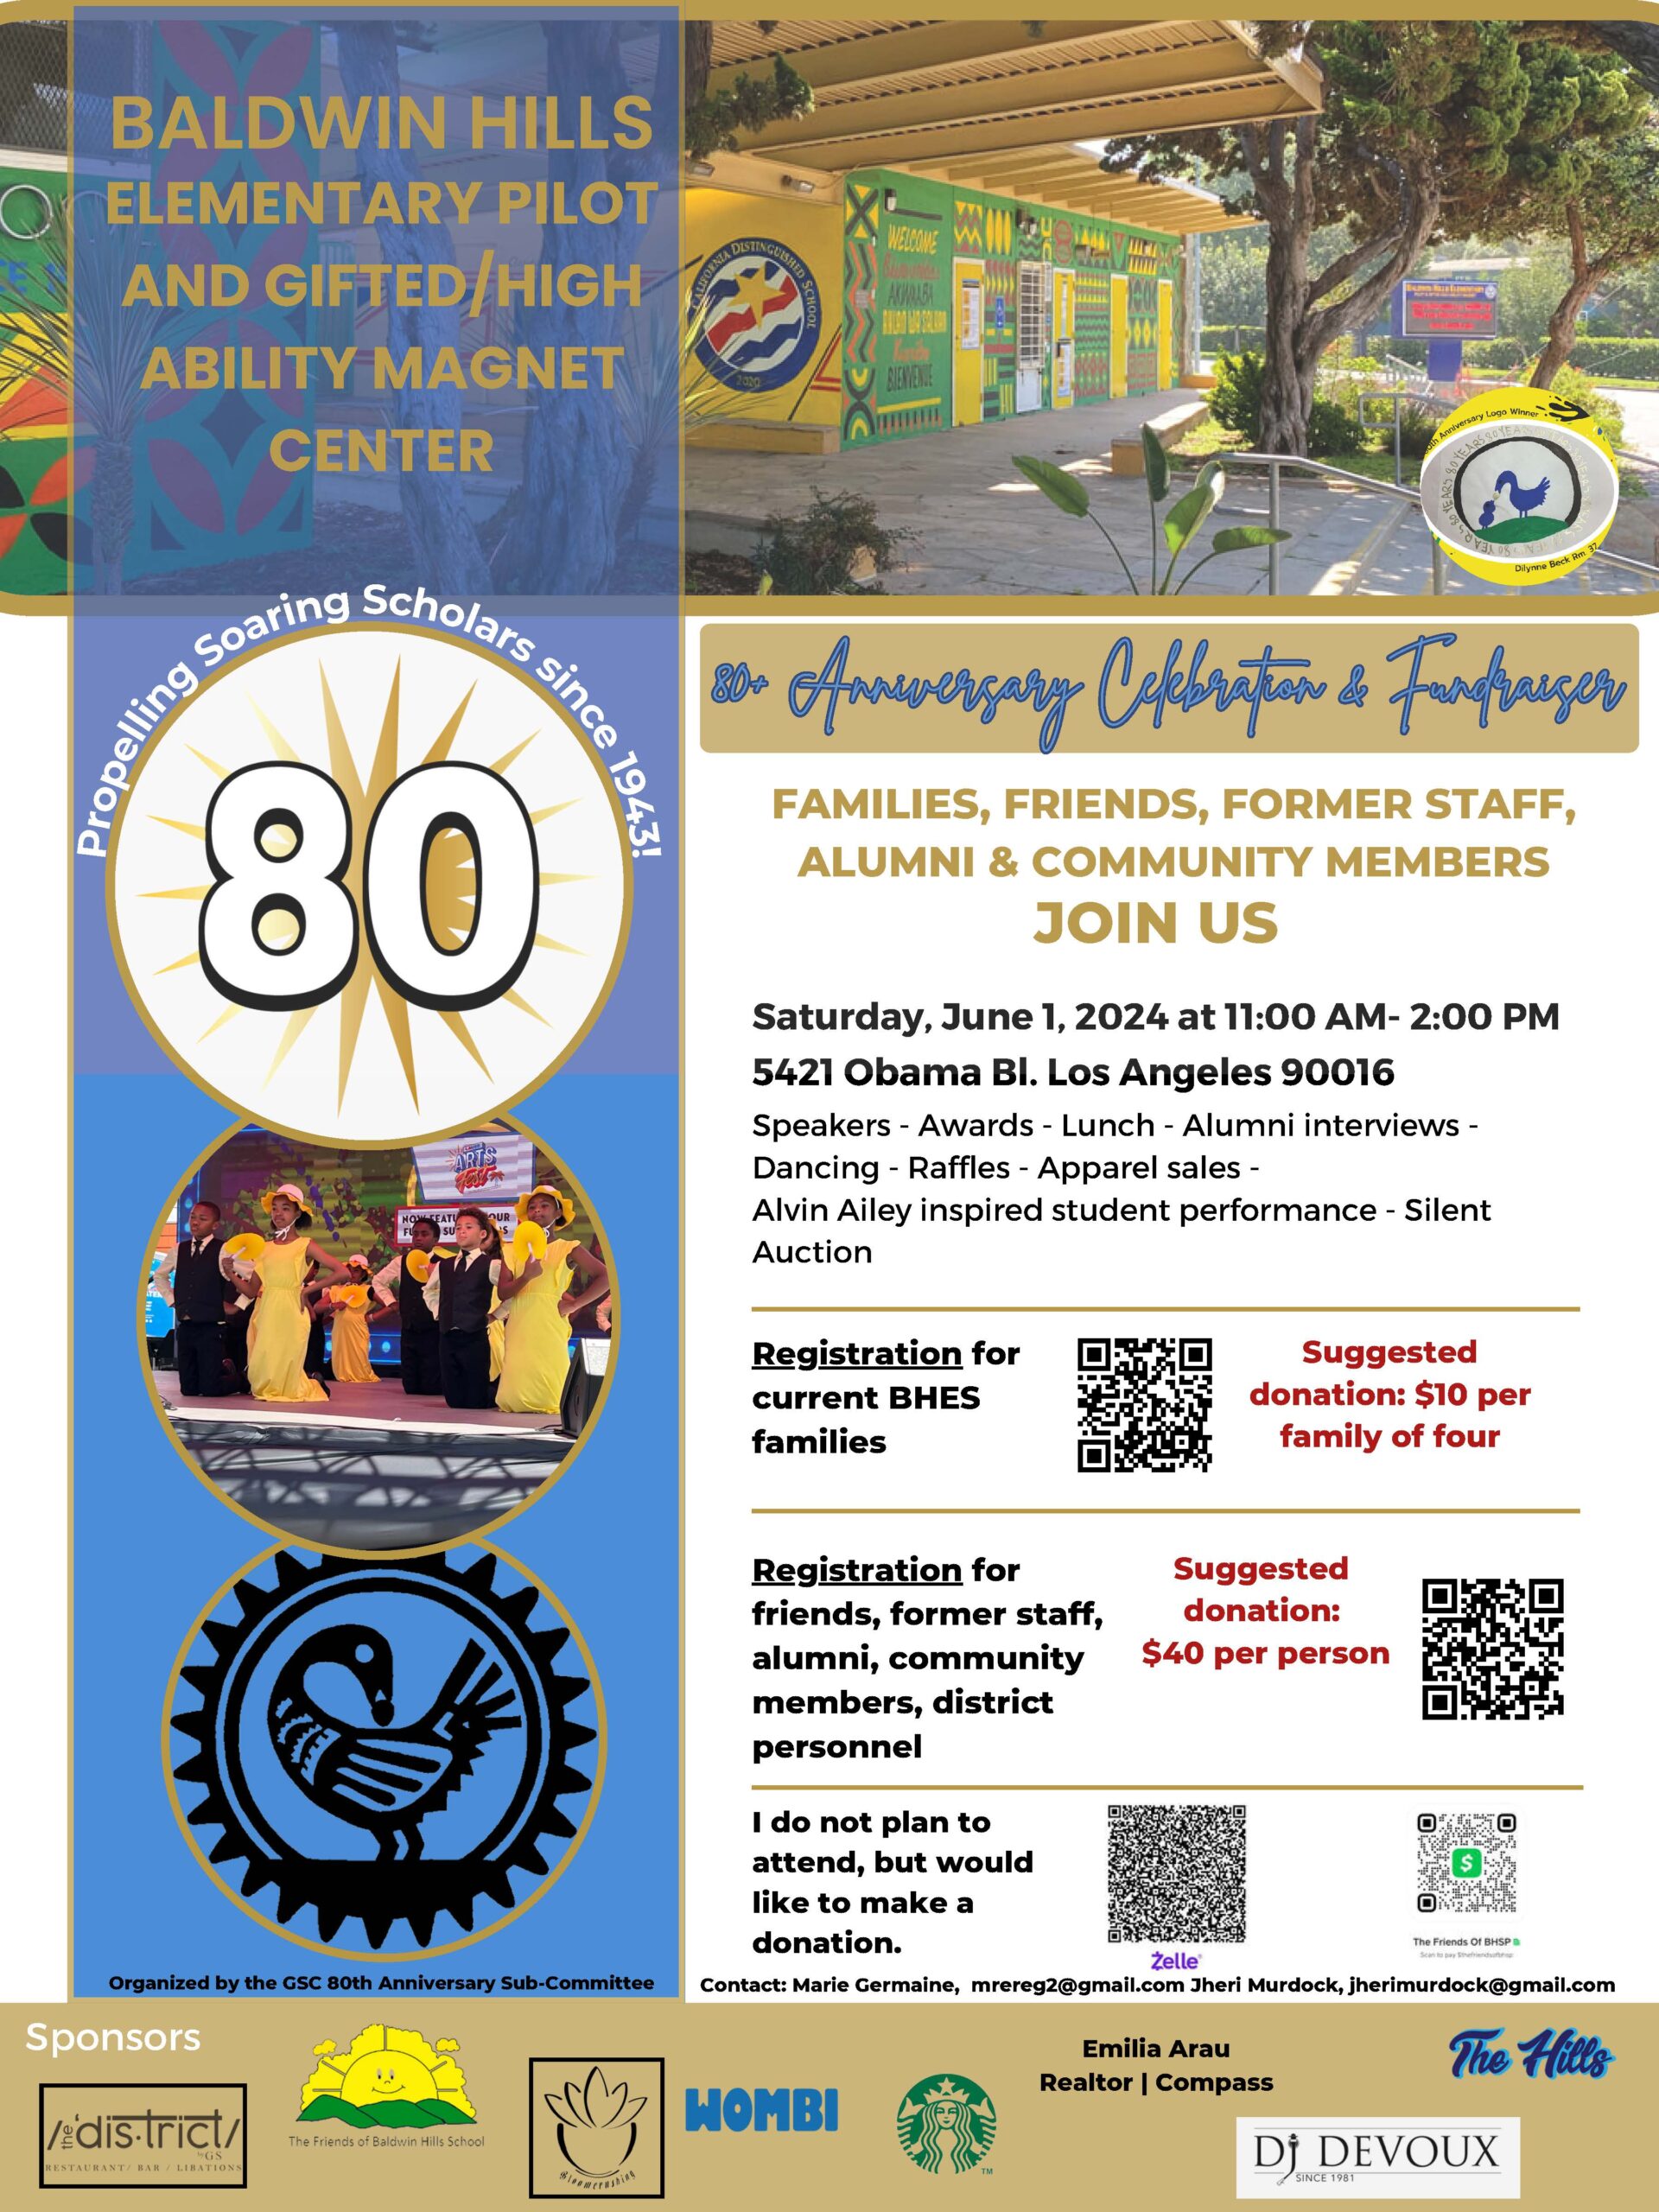 Baldwin Hills Elementary 80th Anniversary Celebration Event details